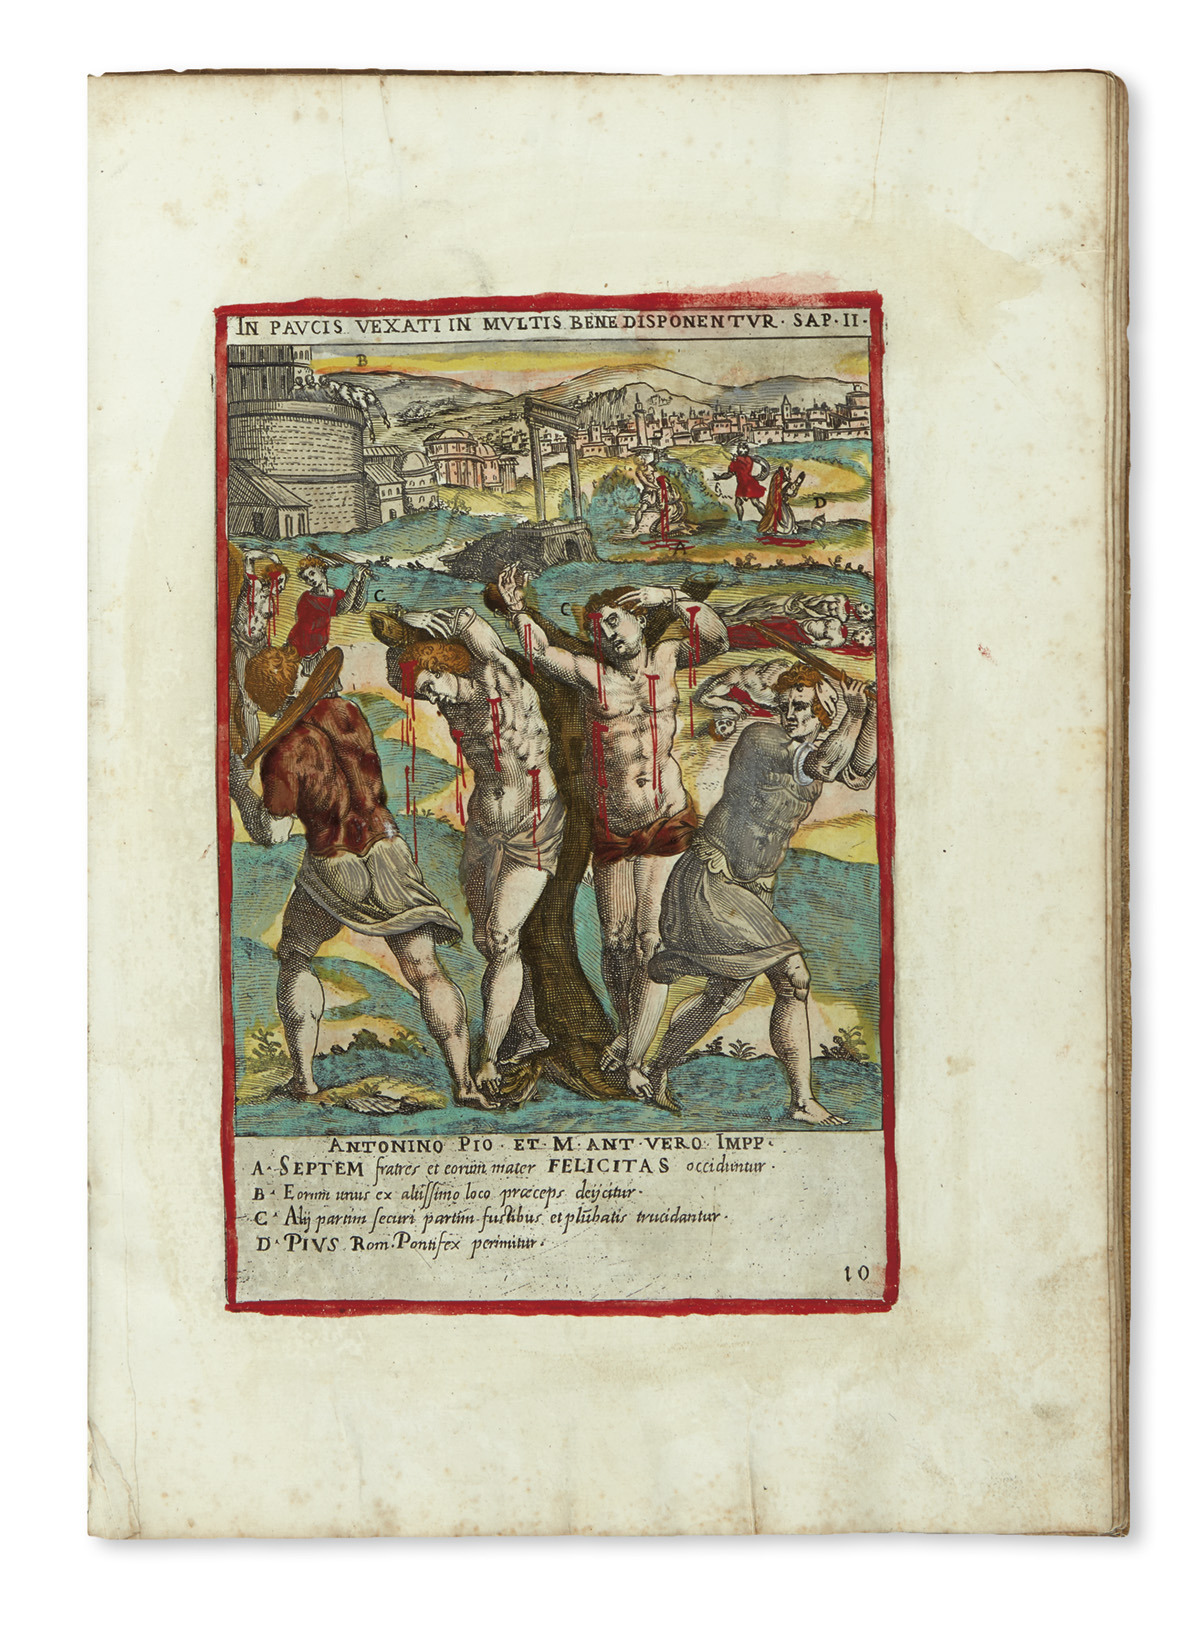 CIRCIGNANI, NICCOLÒ. Ecclesiae militantis triumphi.  1585.  Hand-colored copy.